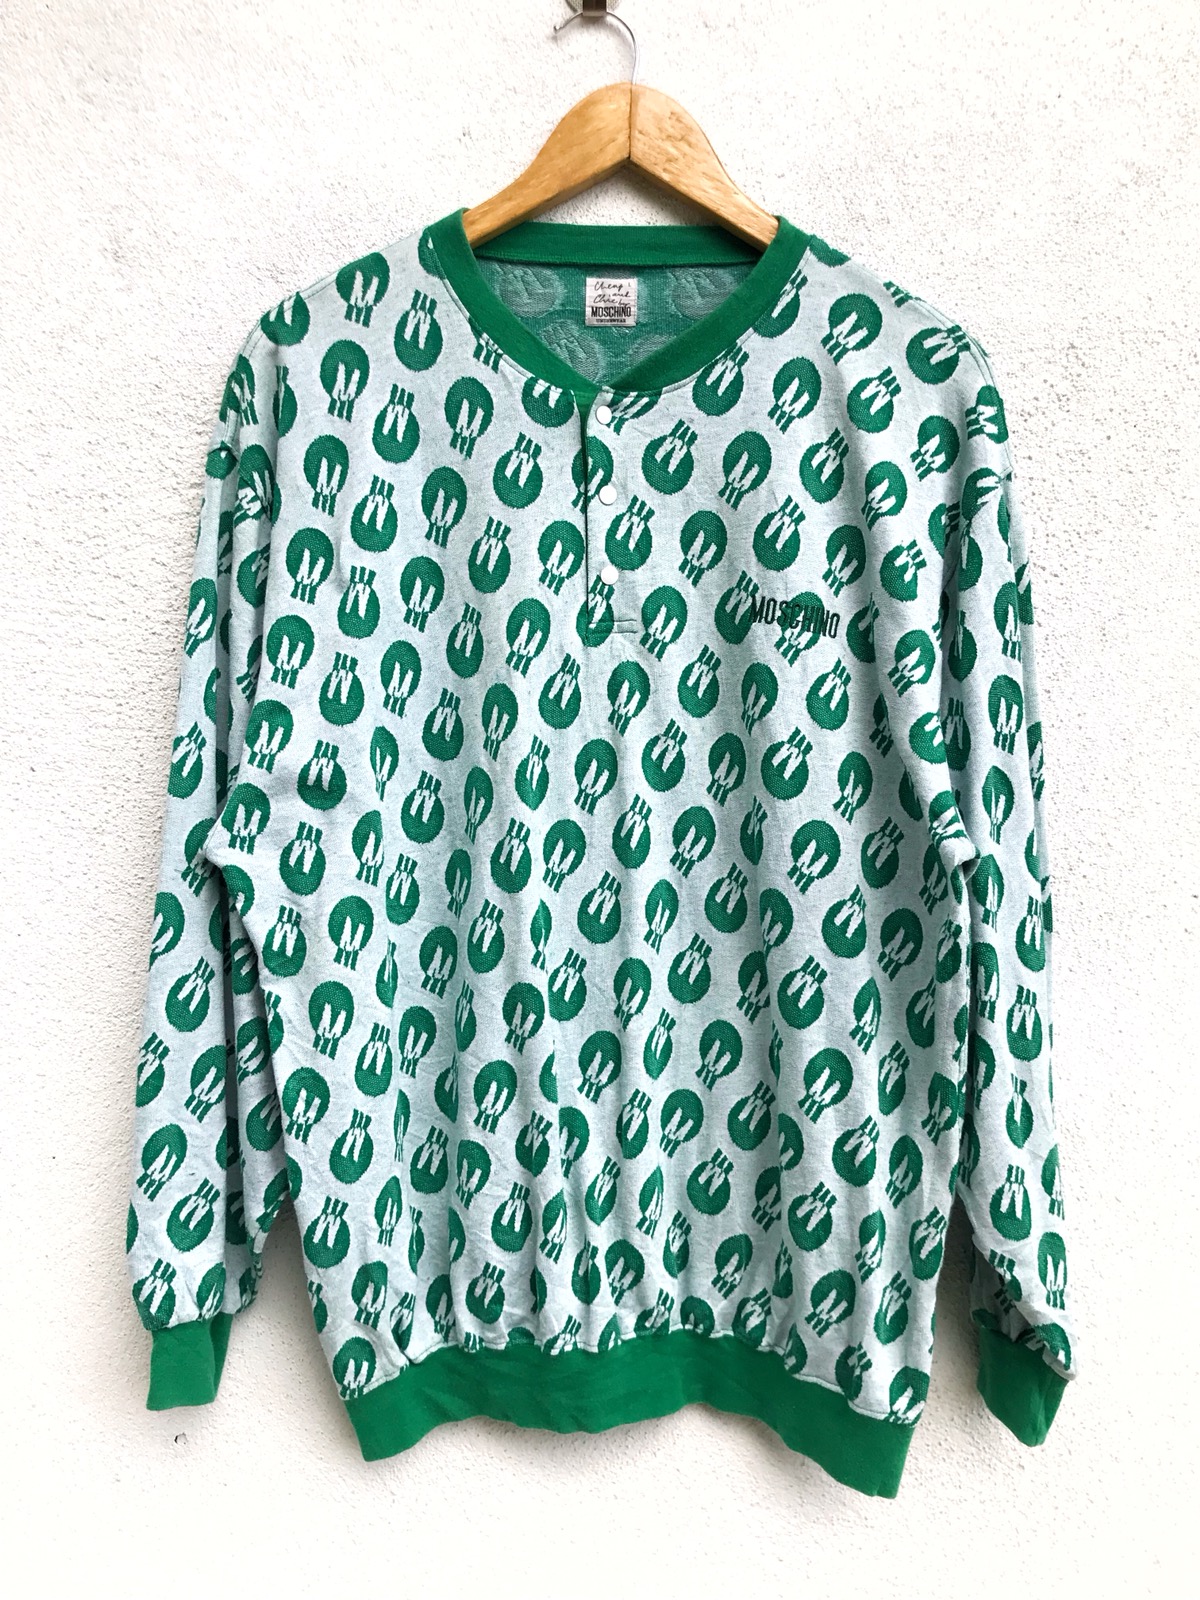 Mochino Cheap & Chic Fullprinted Polka dots Knit Sweatshirt - 1